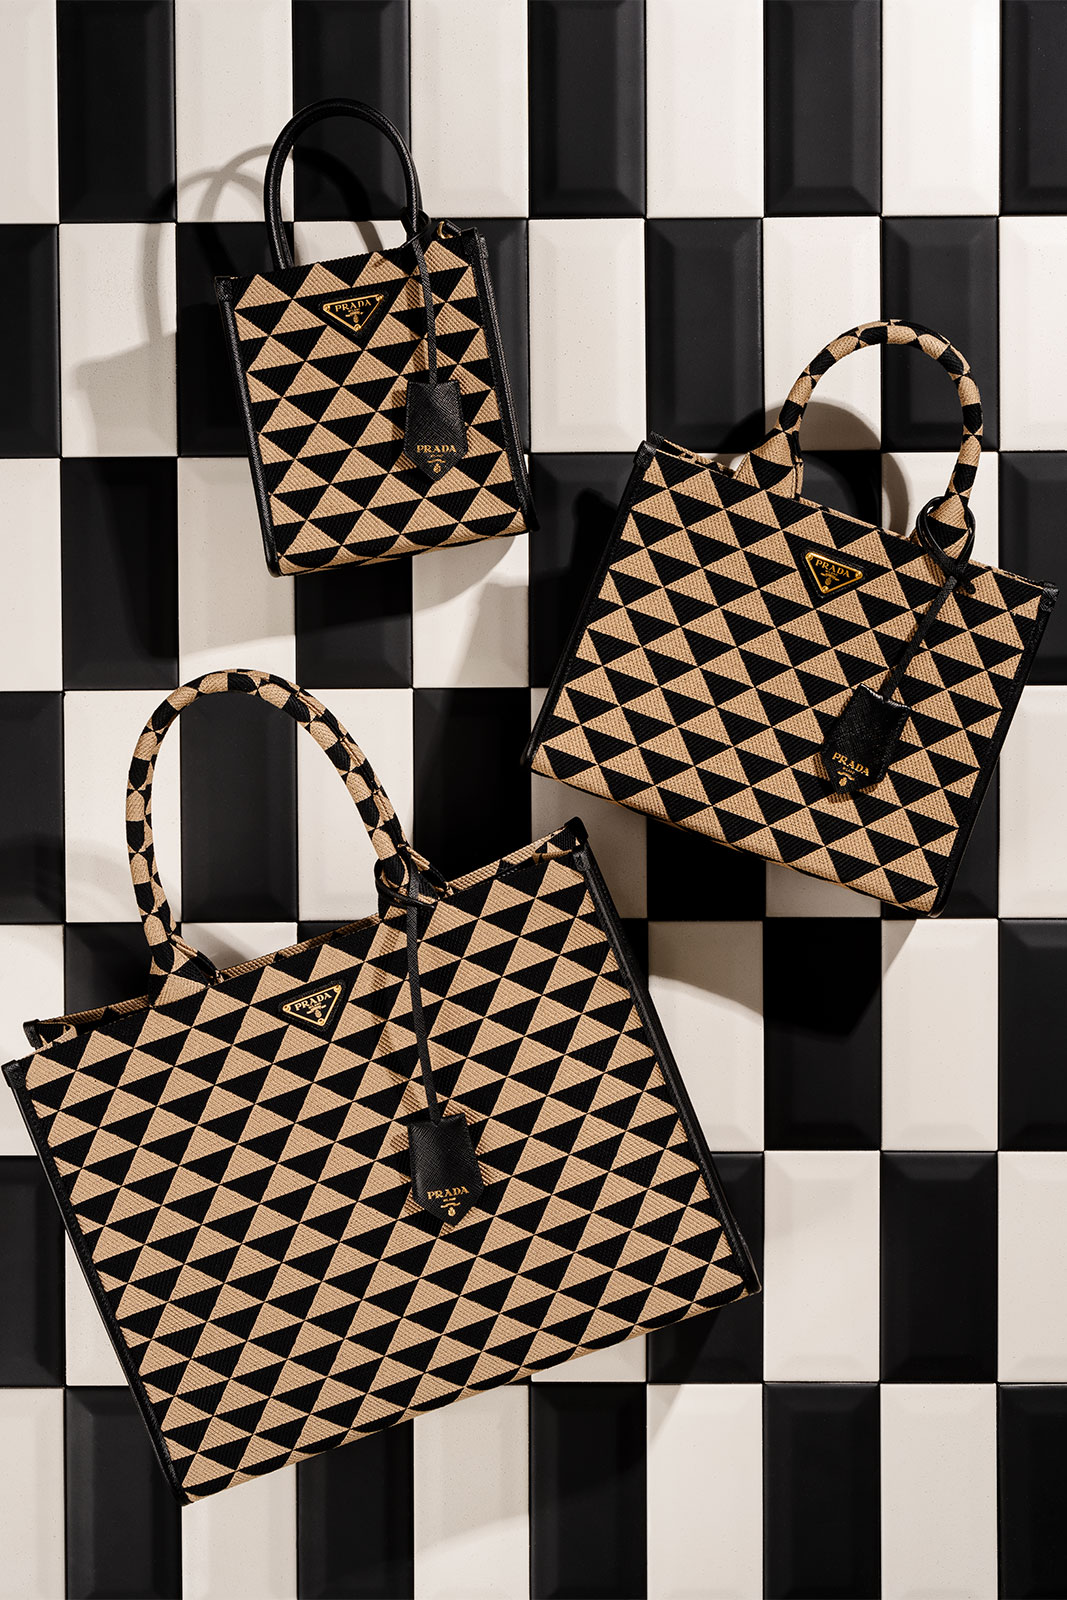 Hippochi on Instagram: Prada Symbol Triangle Pattern Bag Now